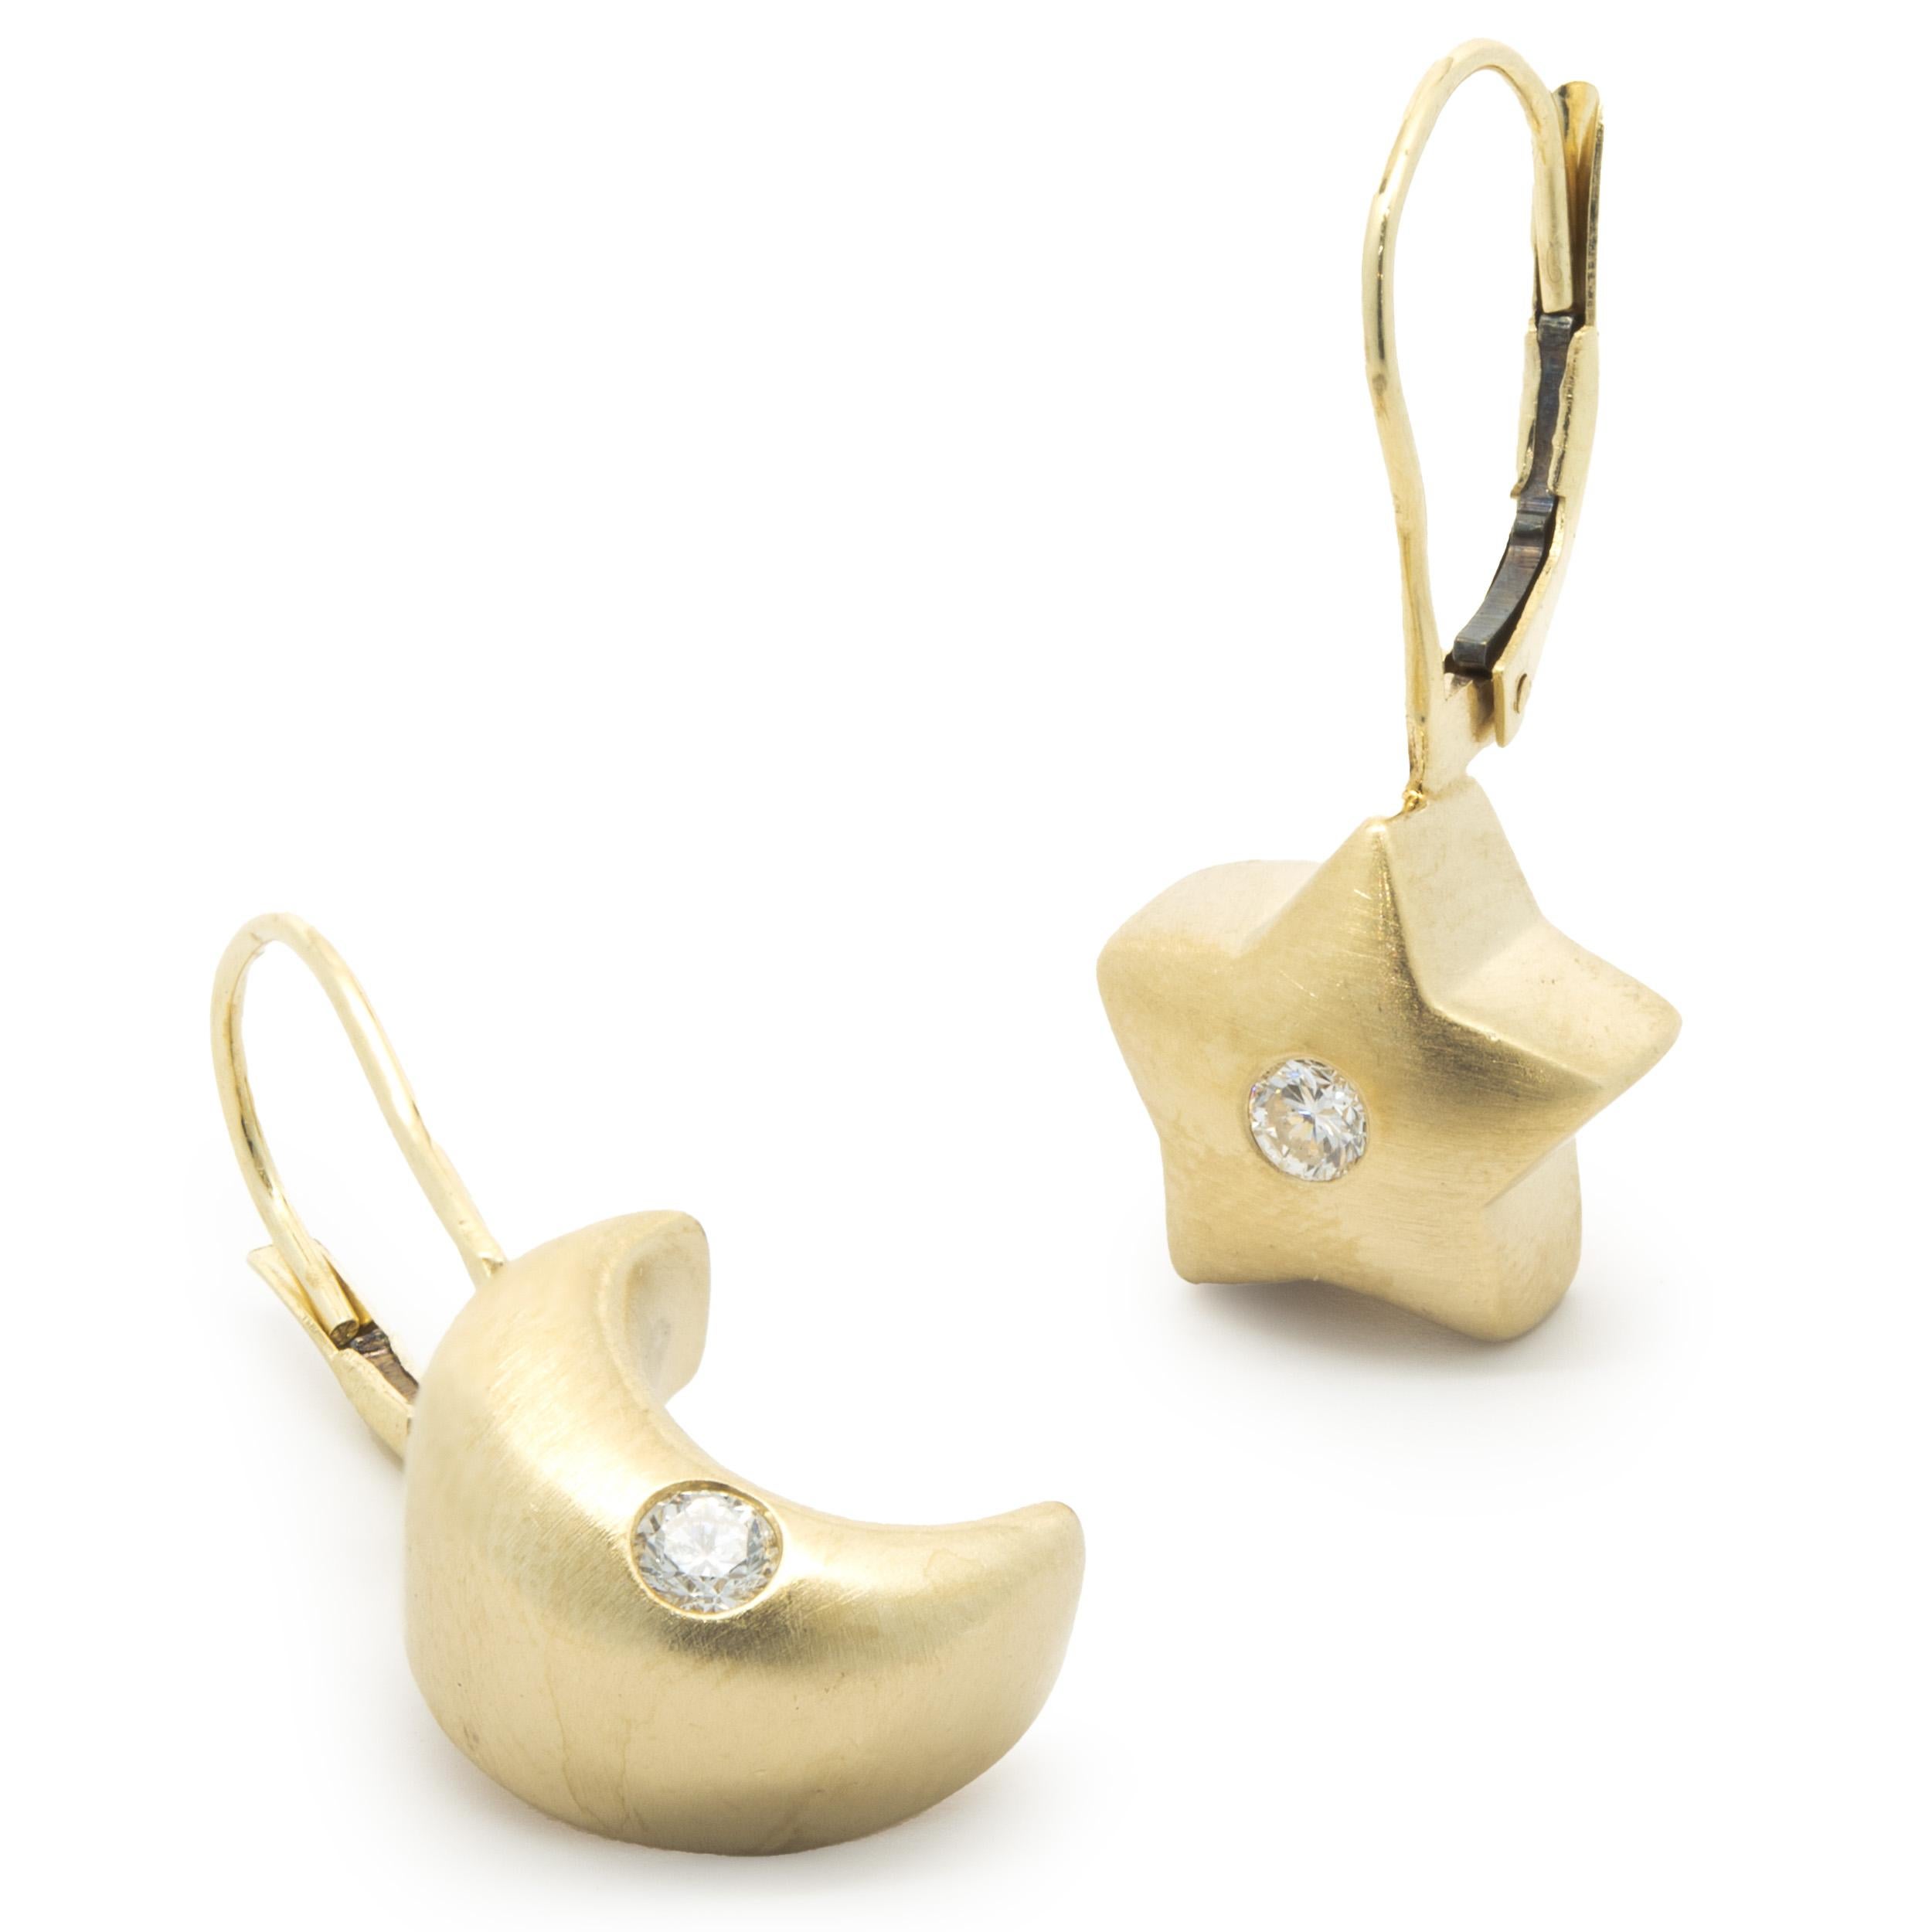 Designer: custom design
Material: 14K yellow gold
Diamond: 2 round brilliant cut = 0.12cttw
Color: H
Clarity: SI1
Dimensions: earrings measure 24mm long
Weight: 5.74 grams